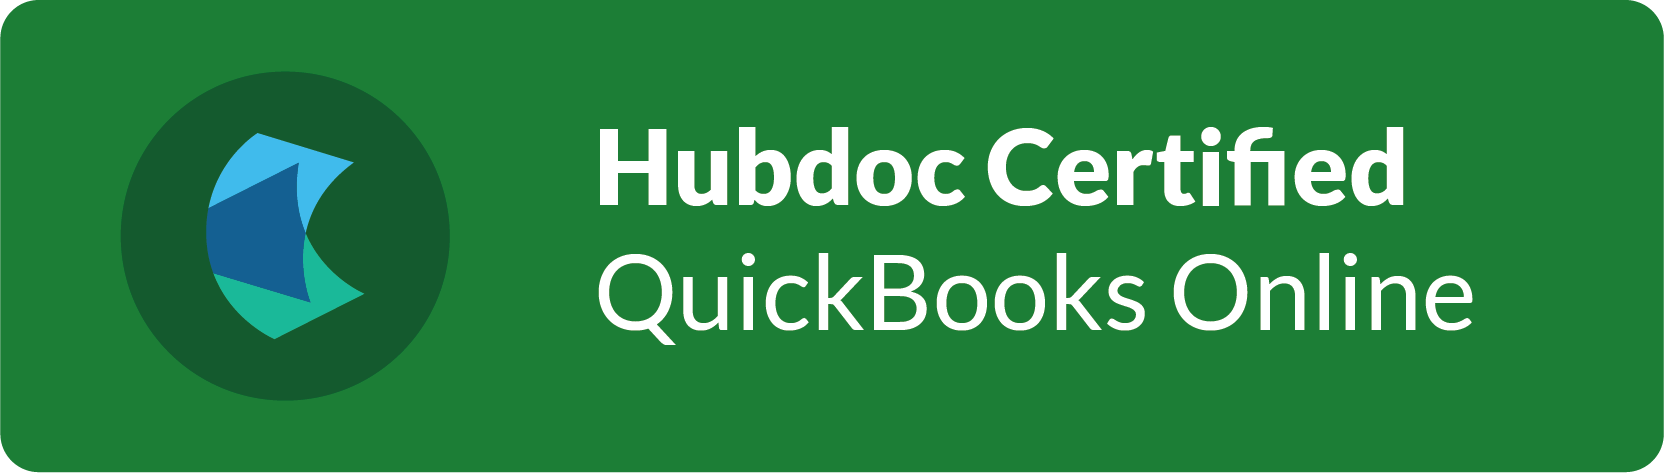 Hubdoc QuickBooks Online Certification